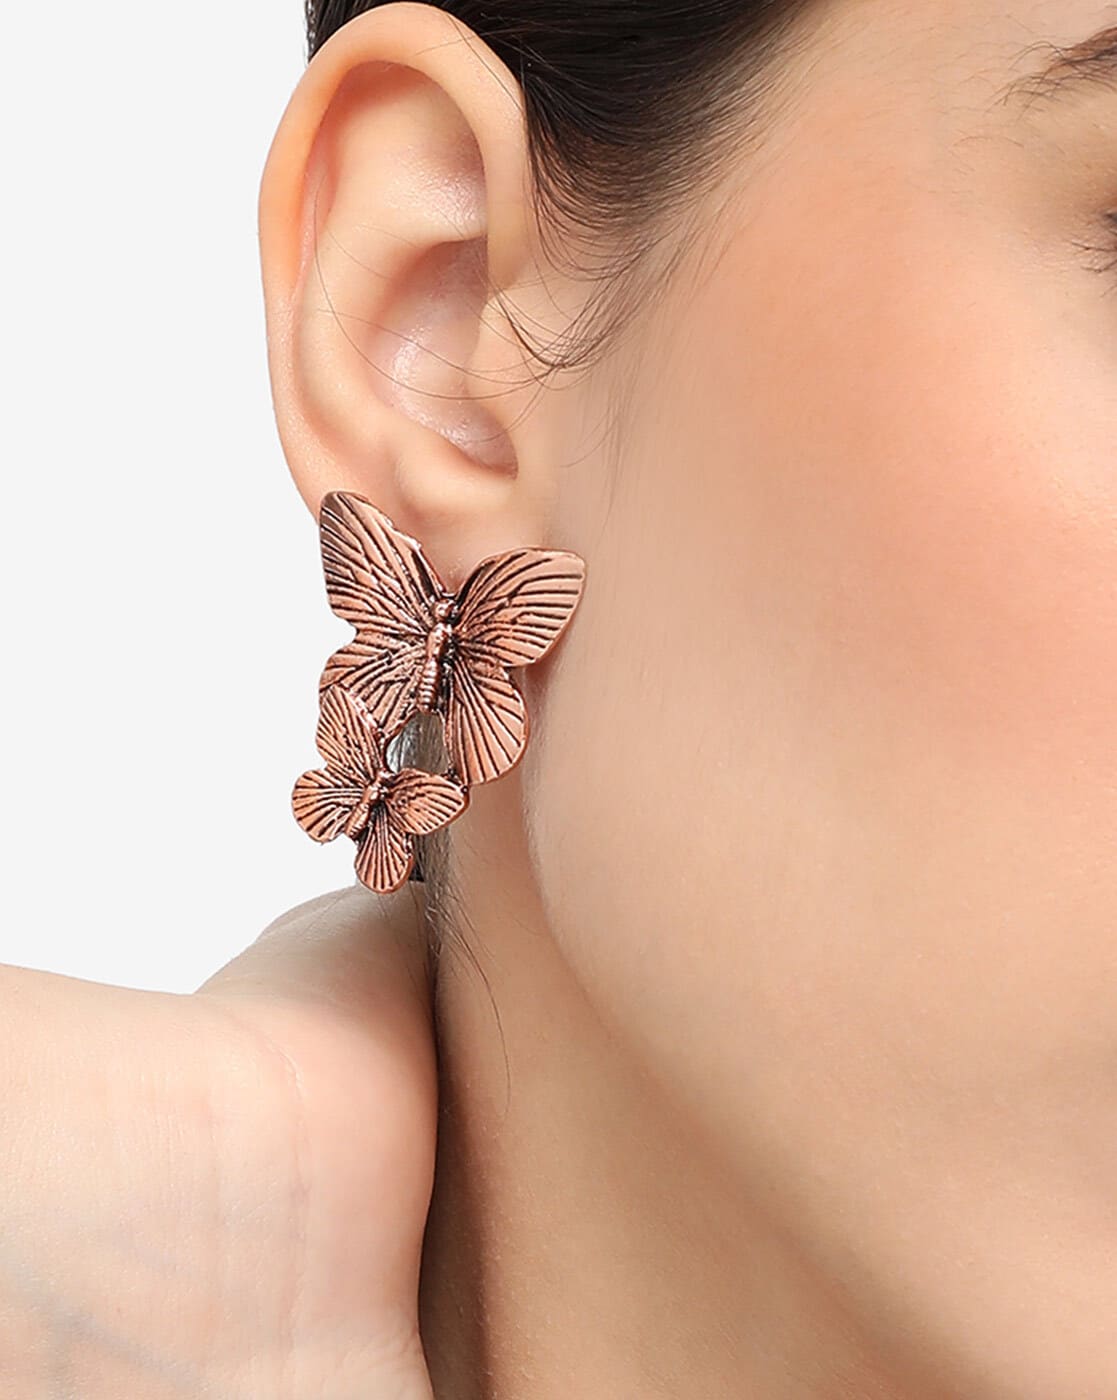 Real Gold Butterfly Earrings Top Sellers  dukesindiacom 1694815808